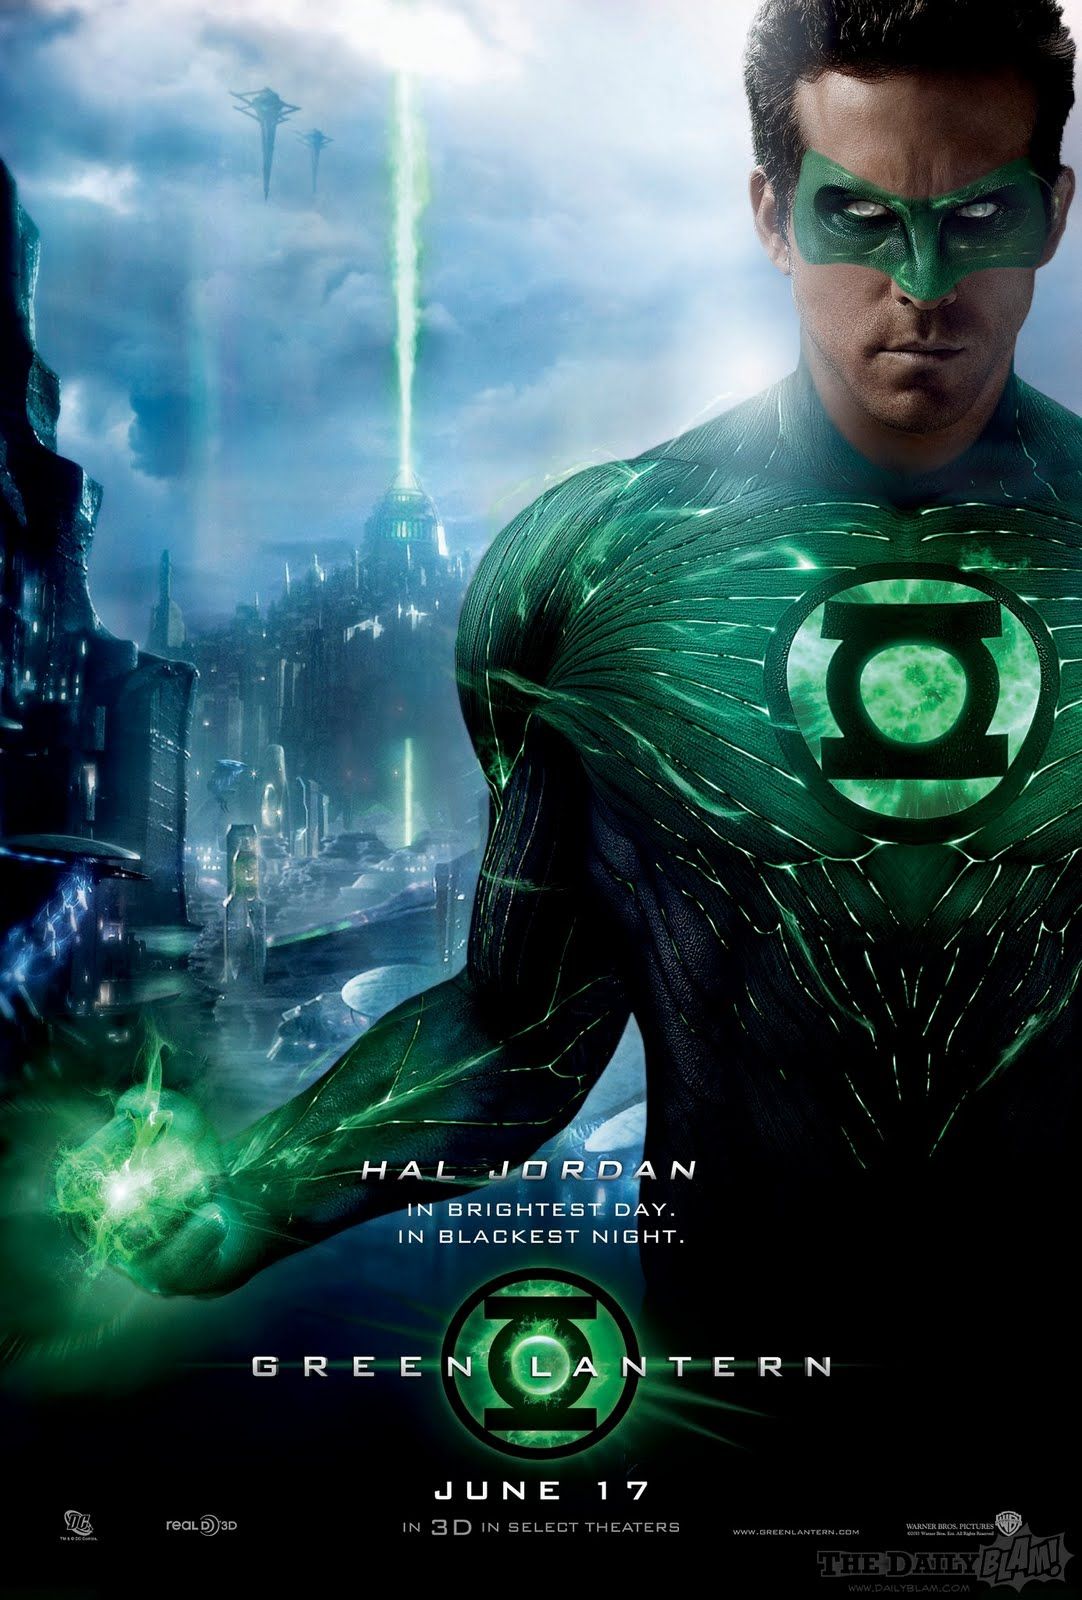 Movie Review: “Green Lantern” Starring Ryan Reynolds, Blake Lively (Gossip Girl). Review St. Louis